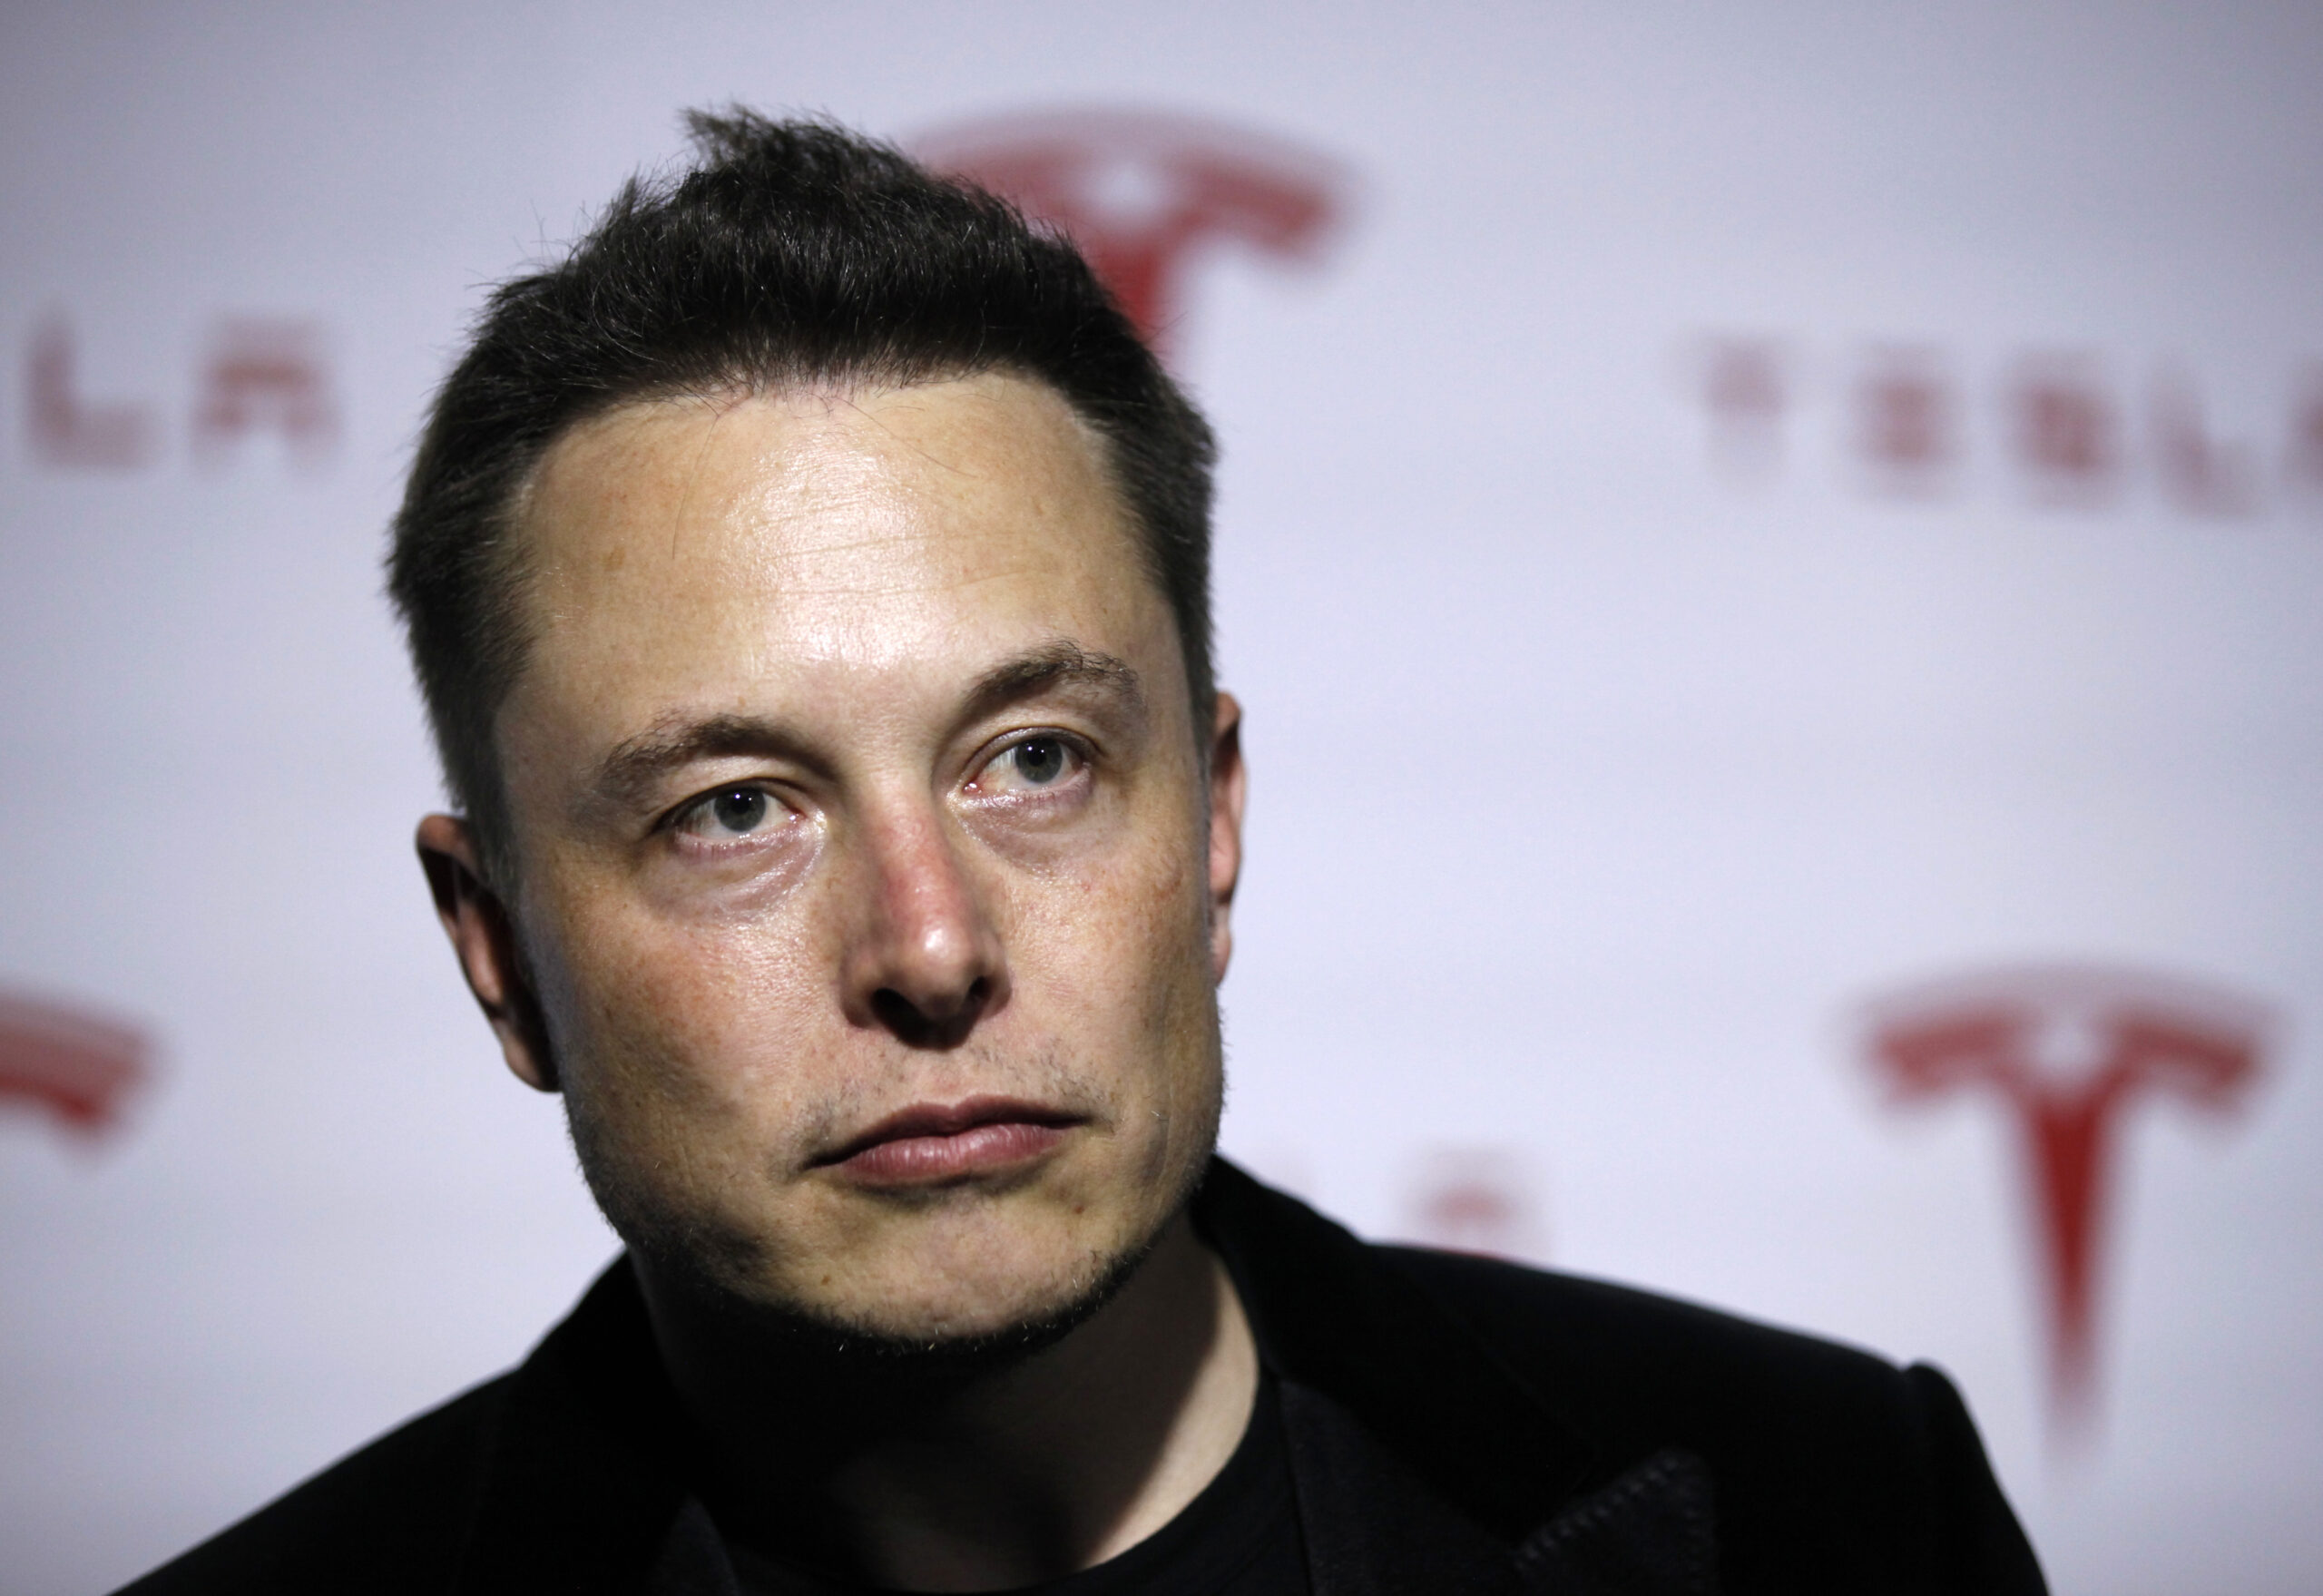 Elon Musk: Our Savior, The Supervillain